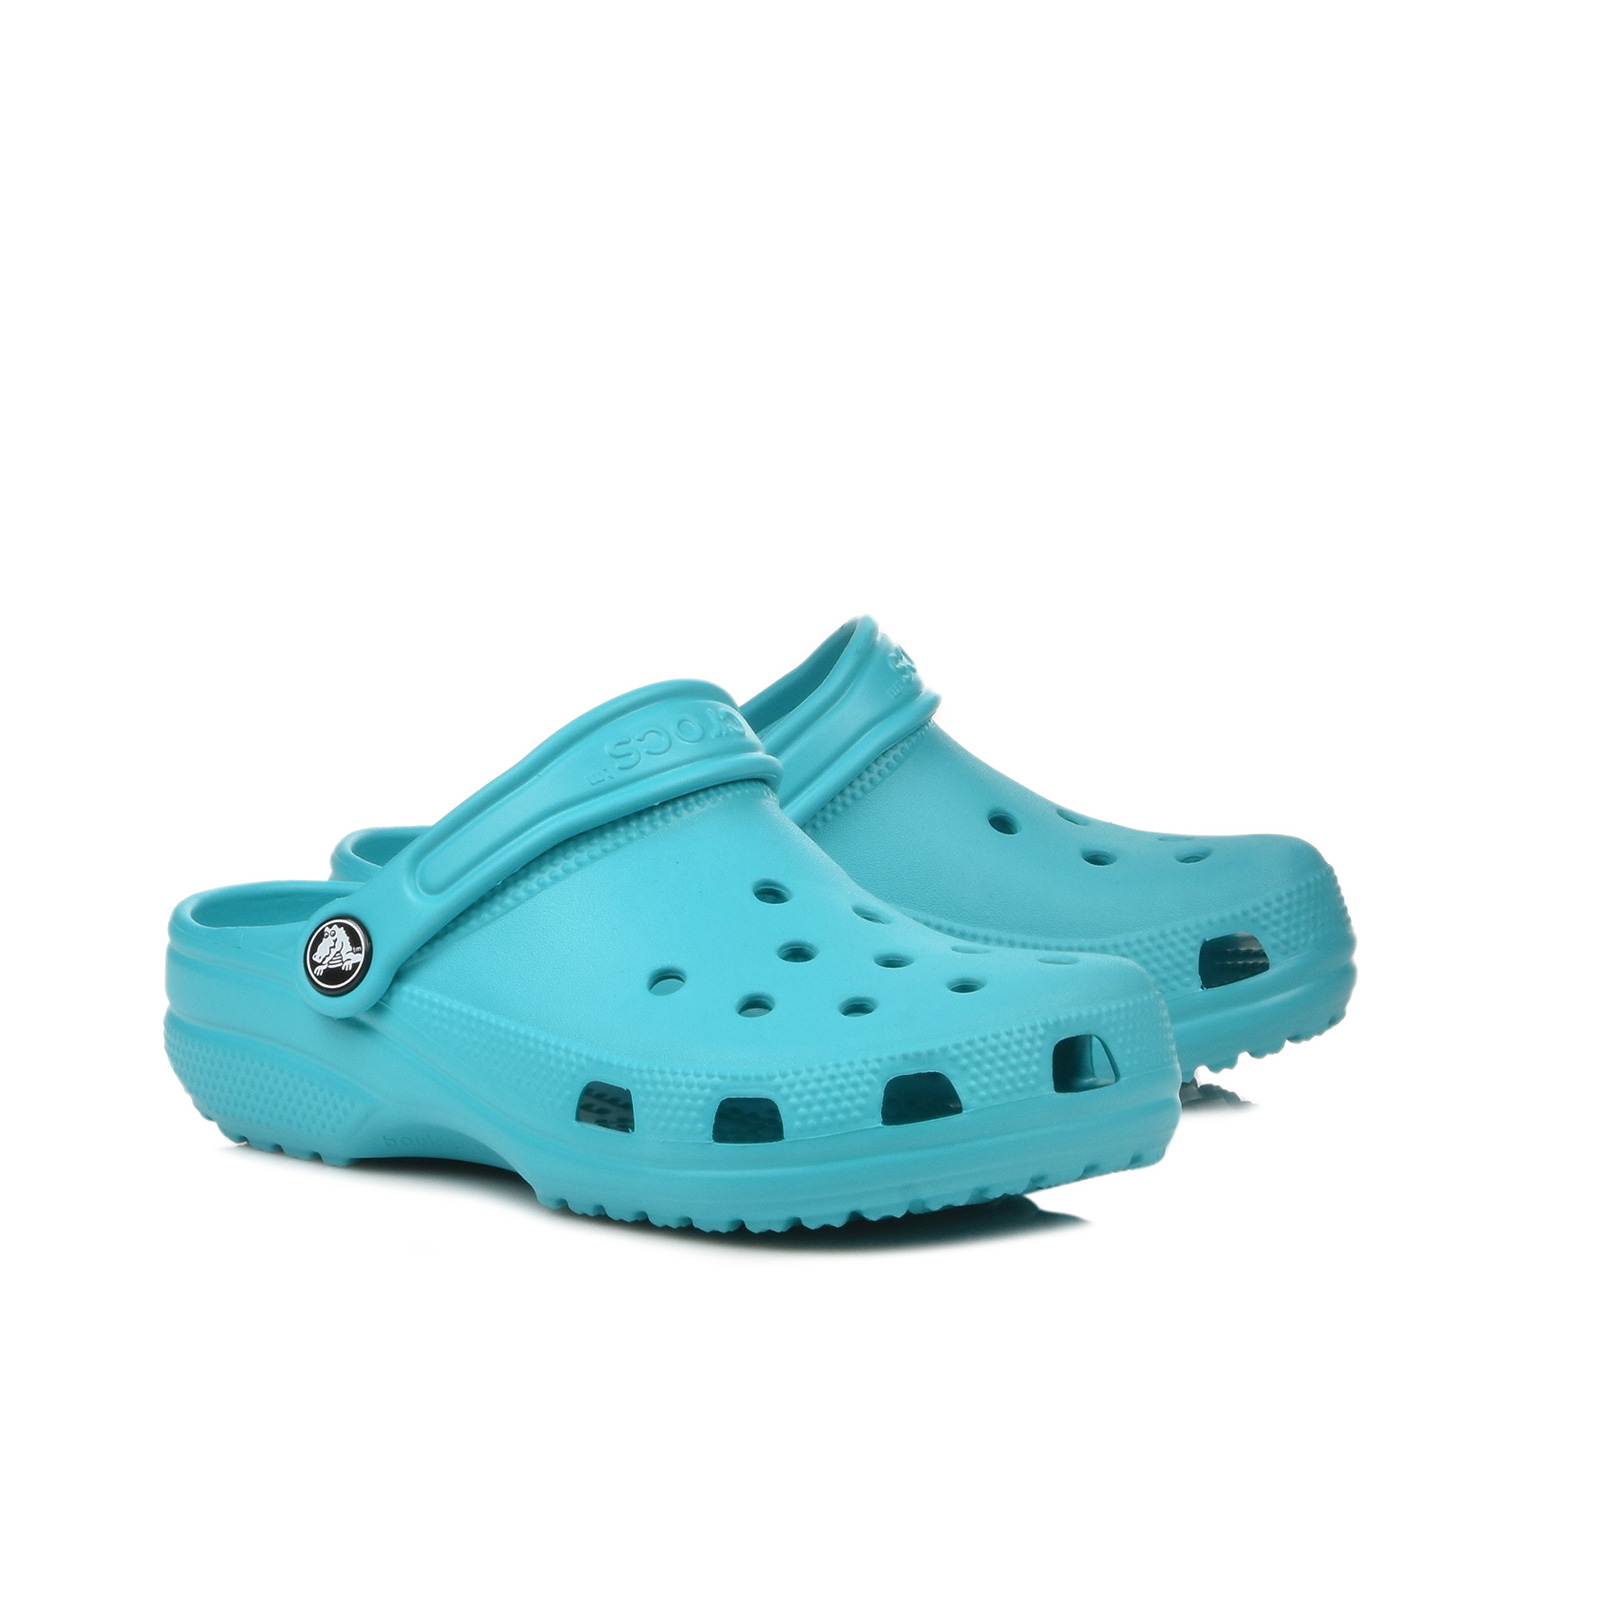 Crocs - CLASSIC CLOG K - TURQUOISE Παιδικά > Παπούτσια > Clogs > Glogs